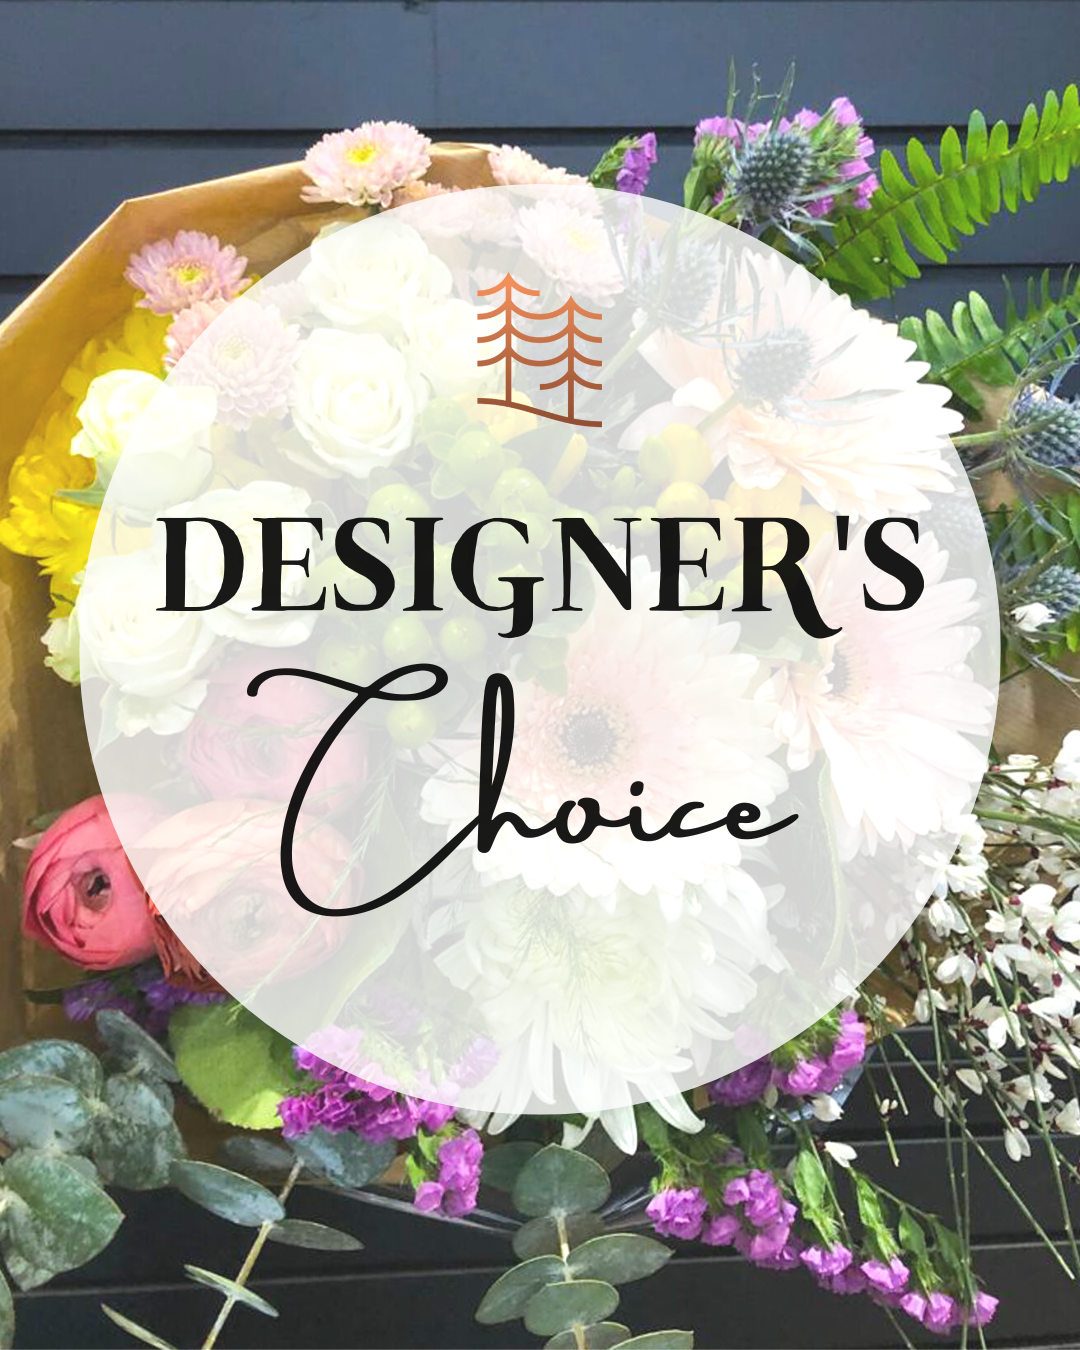 Today's Designer's Choice Bouquet